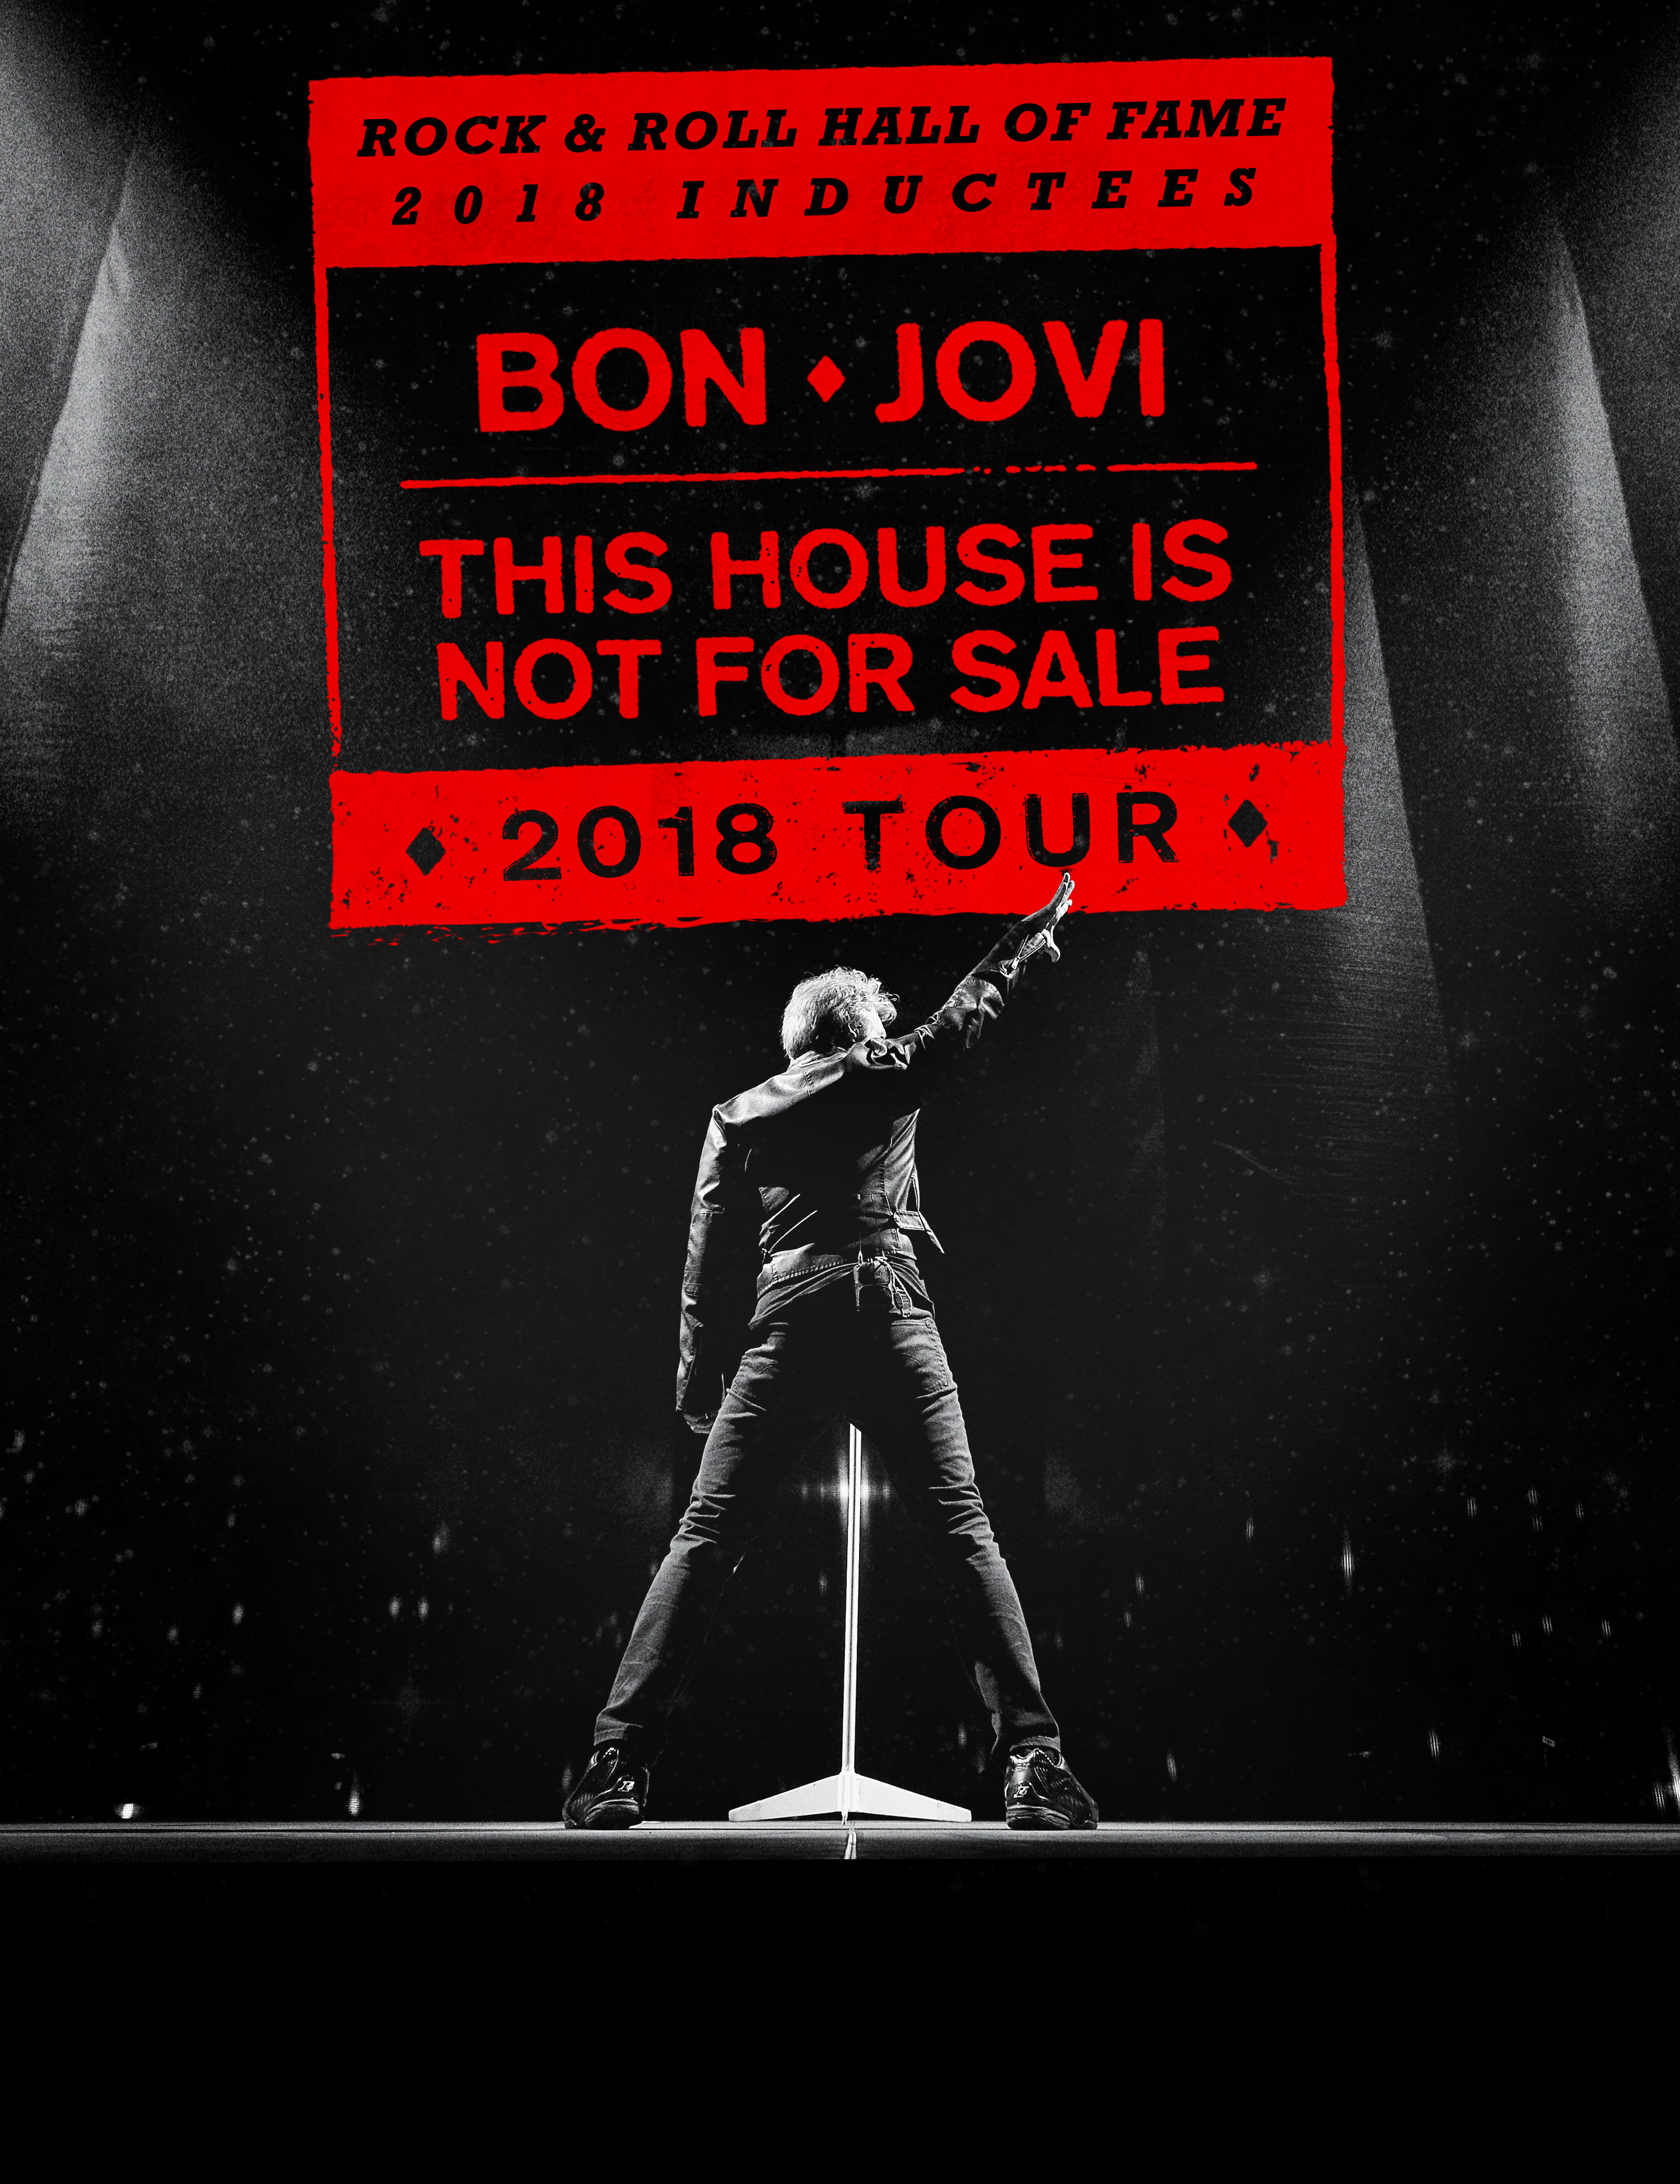 BON JOVI THIS HOUSE IS NOT FOR SALE 2018 TOUR